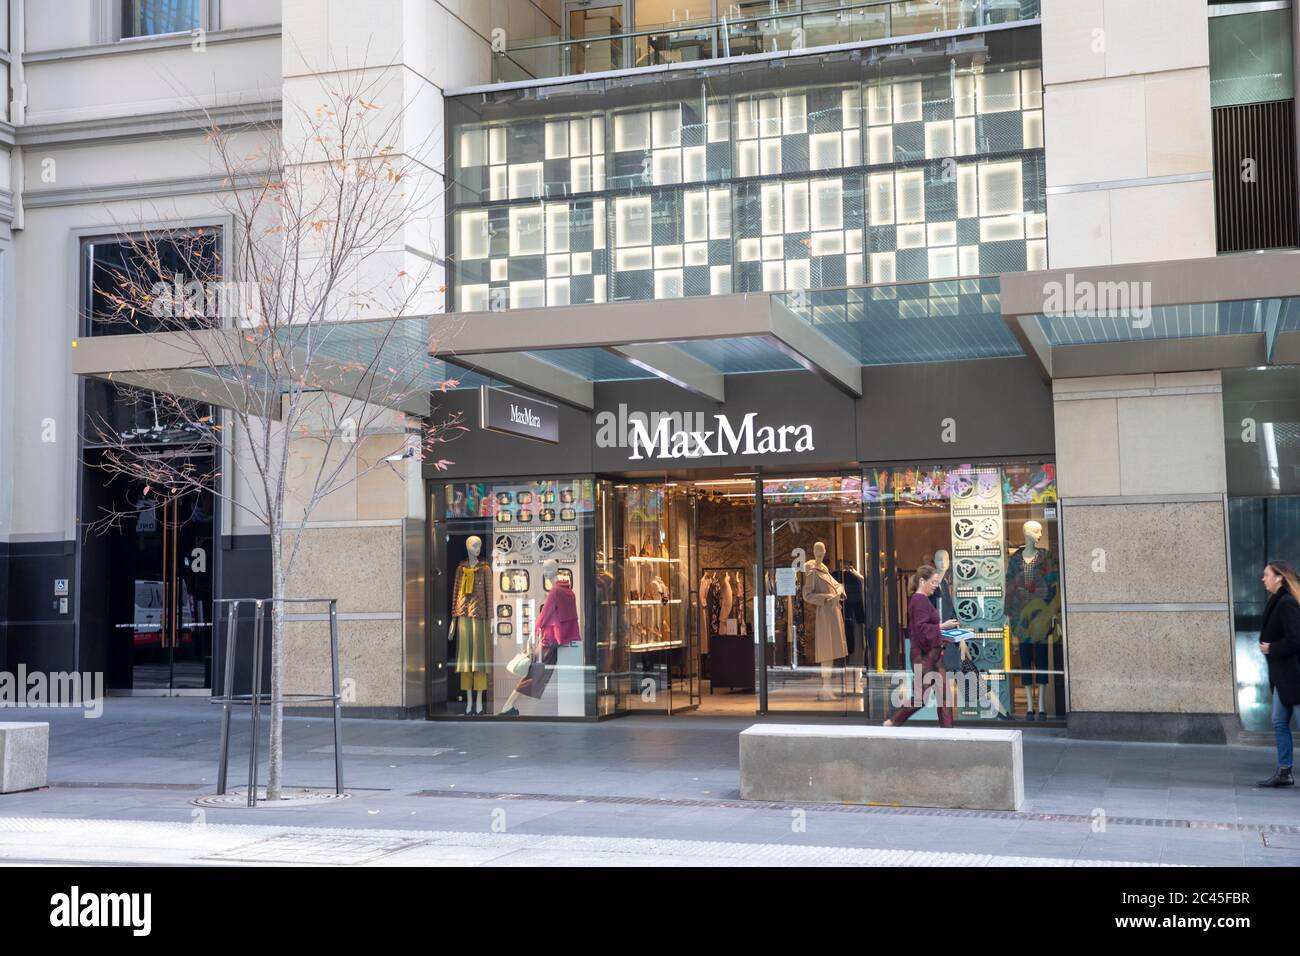 Maxmara Italian fashion brand and their store in Sydney city centre,NSW,Australia Stock Photo